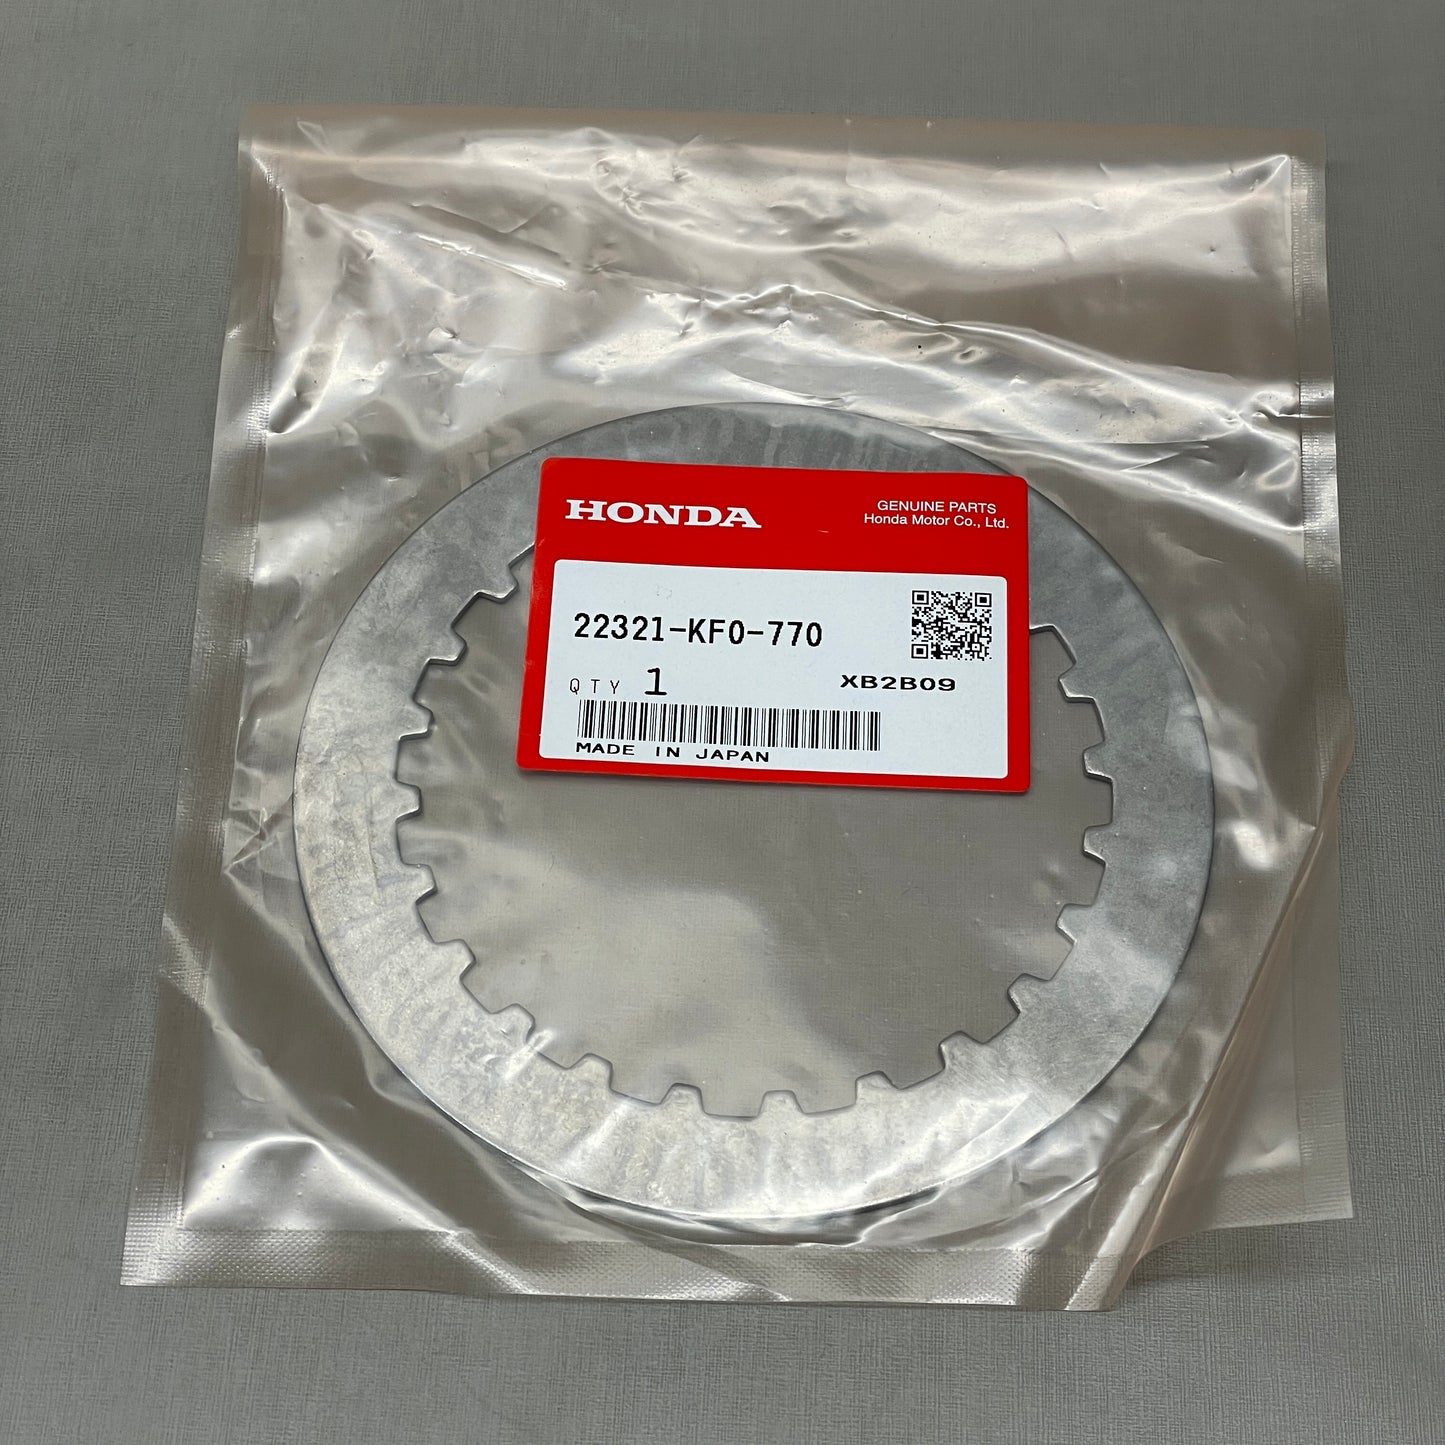 HONDA Clutch Plate CRF250 XR400R TRX450 300 22321-KF0-770 (New)